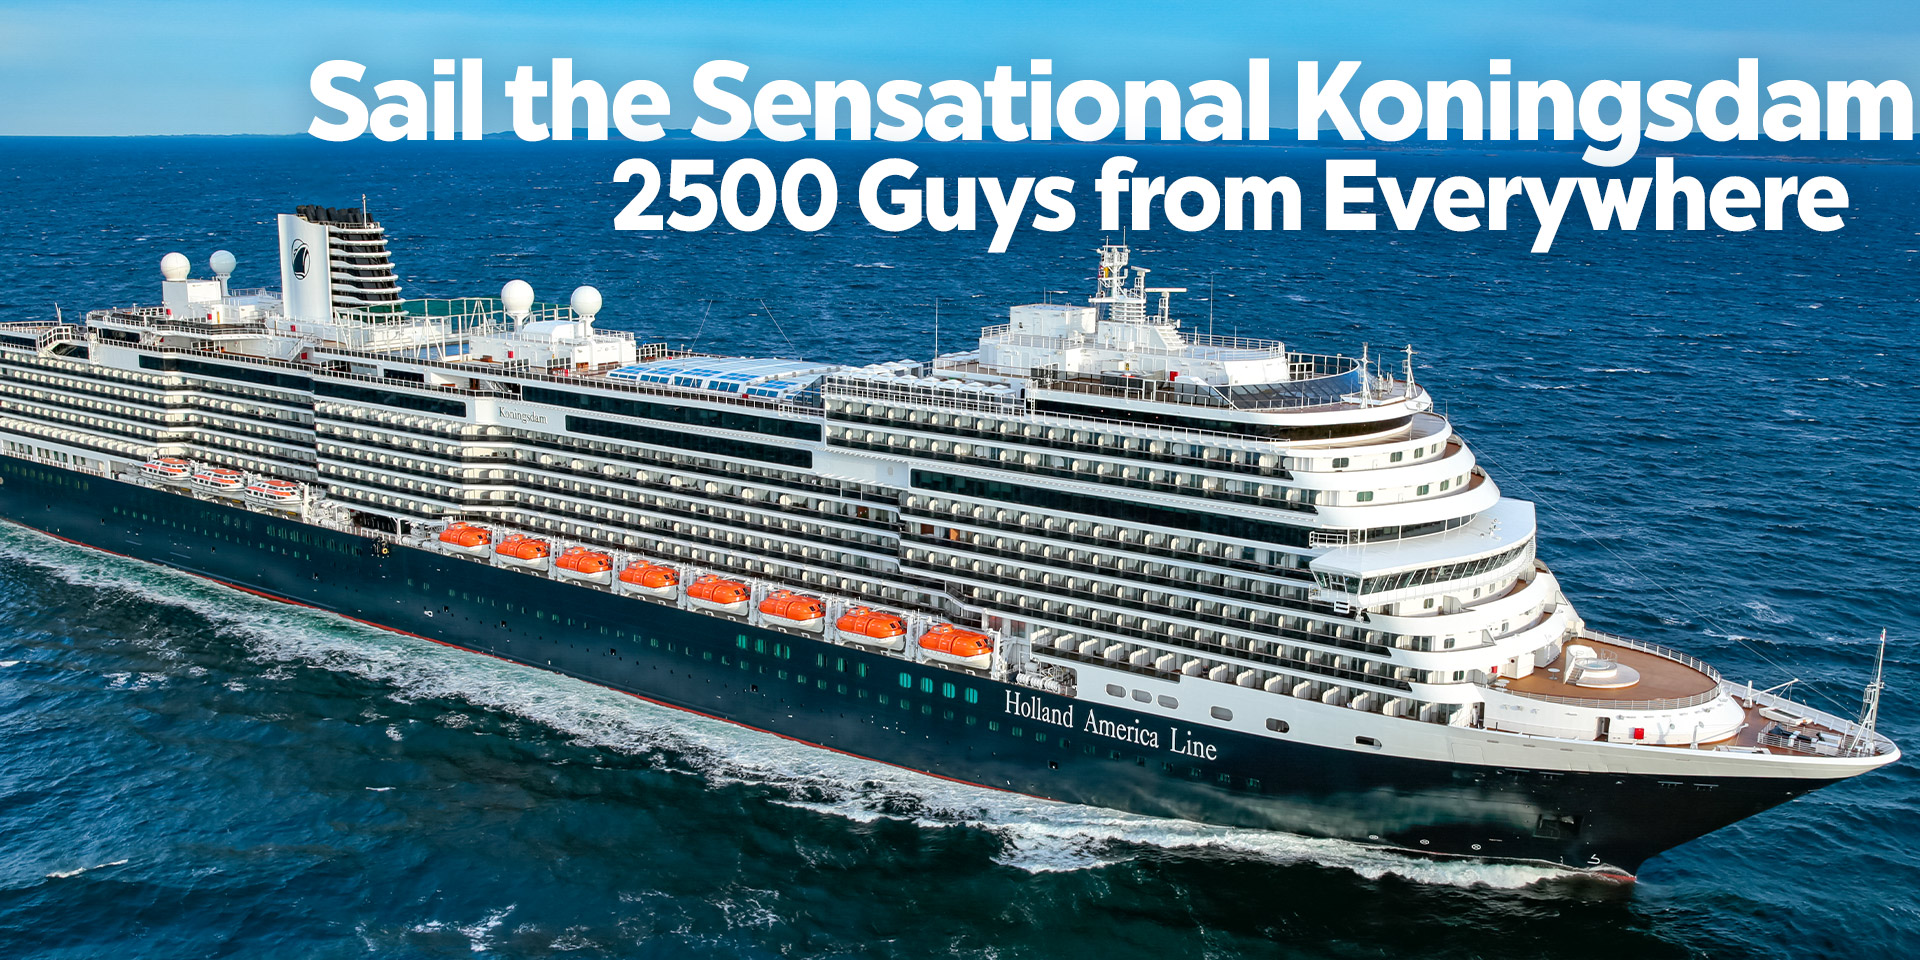 Sail the Sensational Koningsdam 2500 Guys from Everywhere